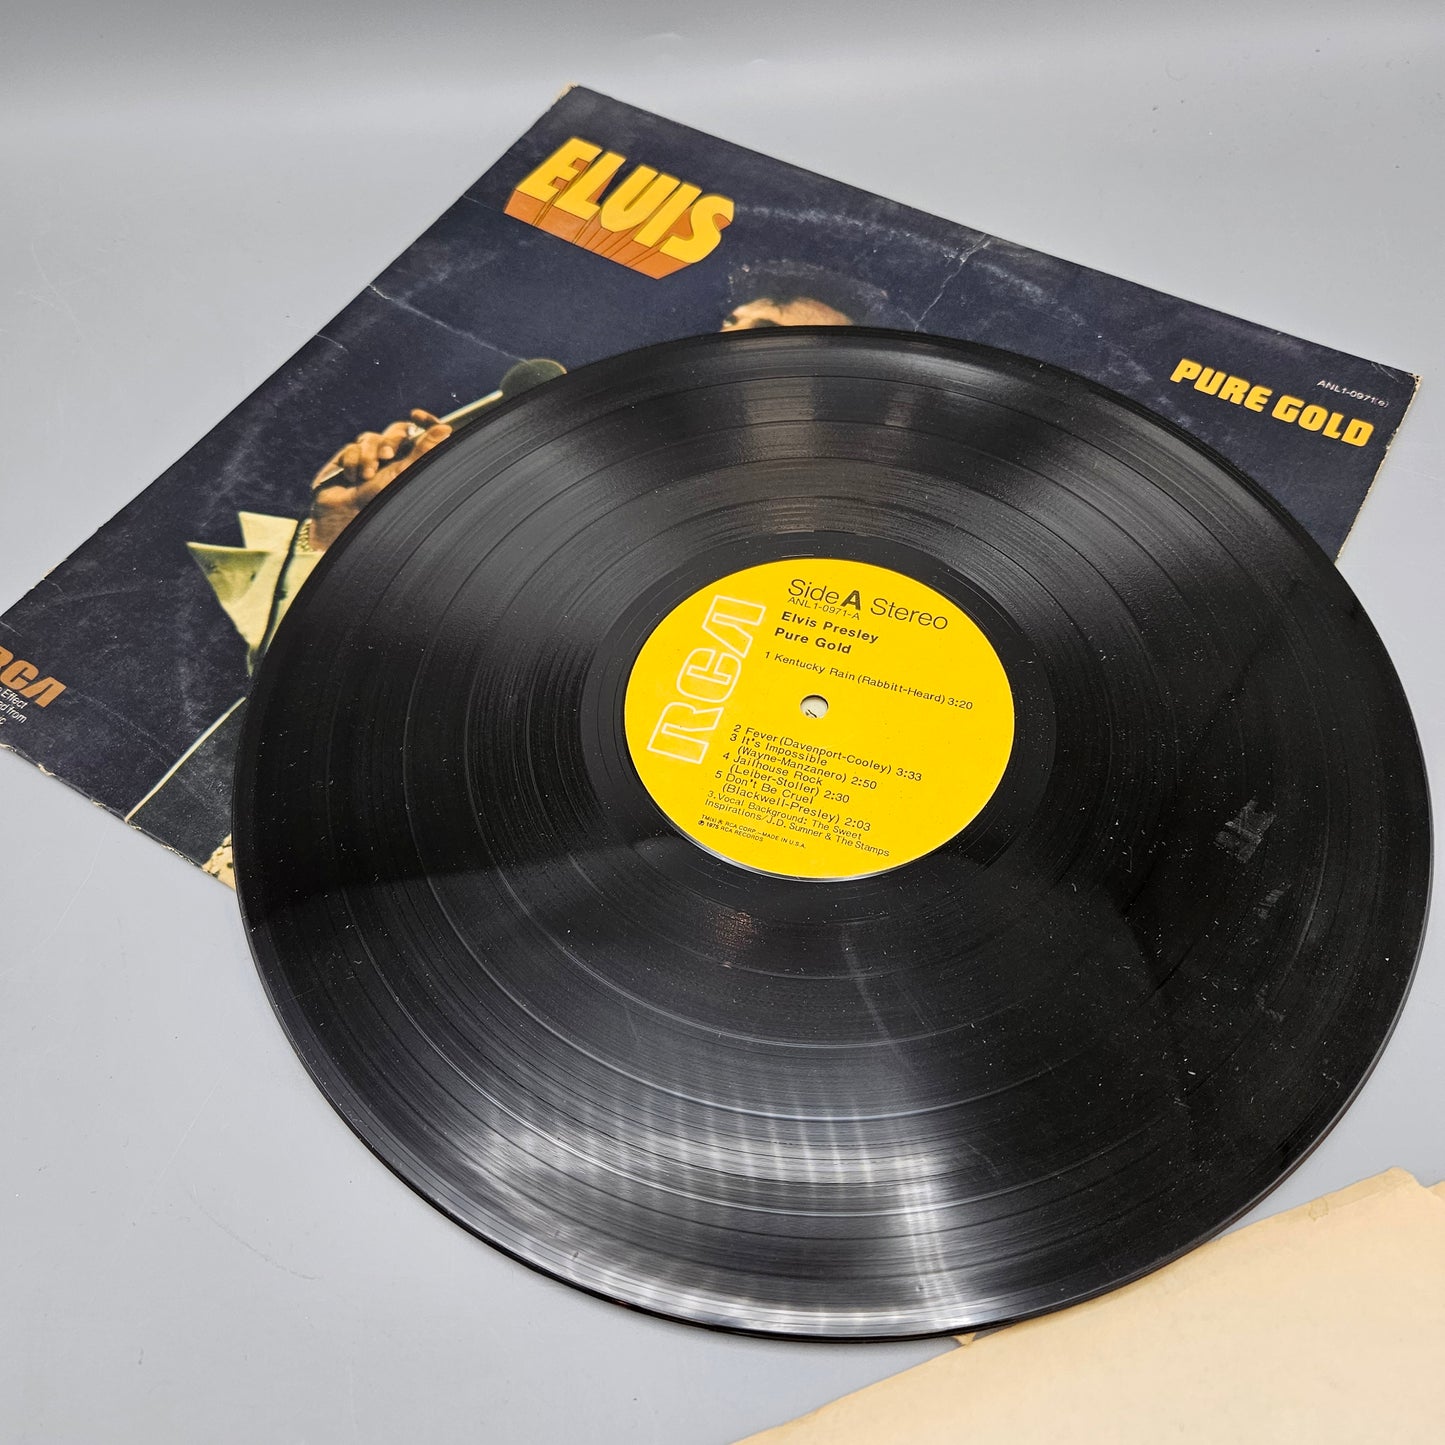 1977 Elvis Presley Pure Gold LP Record